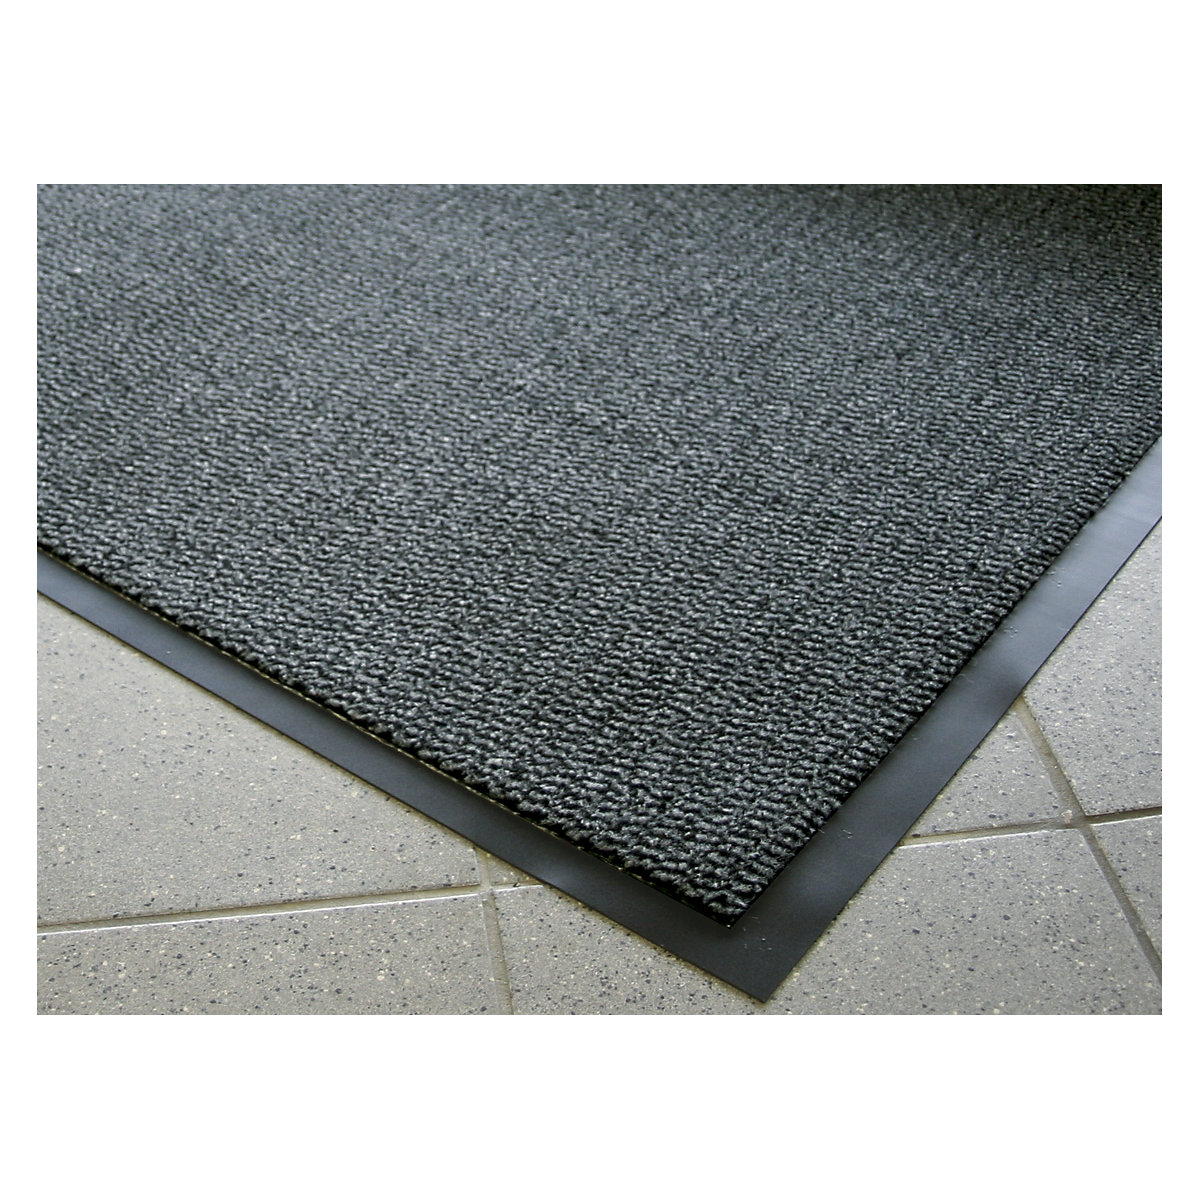 Entrance matting for indoor use, polypropylene pile, LxW 1800 x 1200 mm, black / metallic